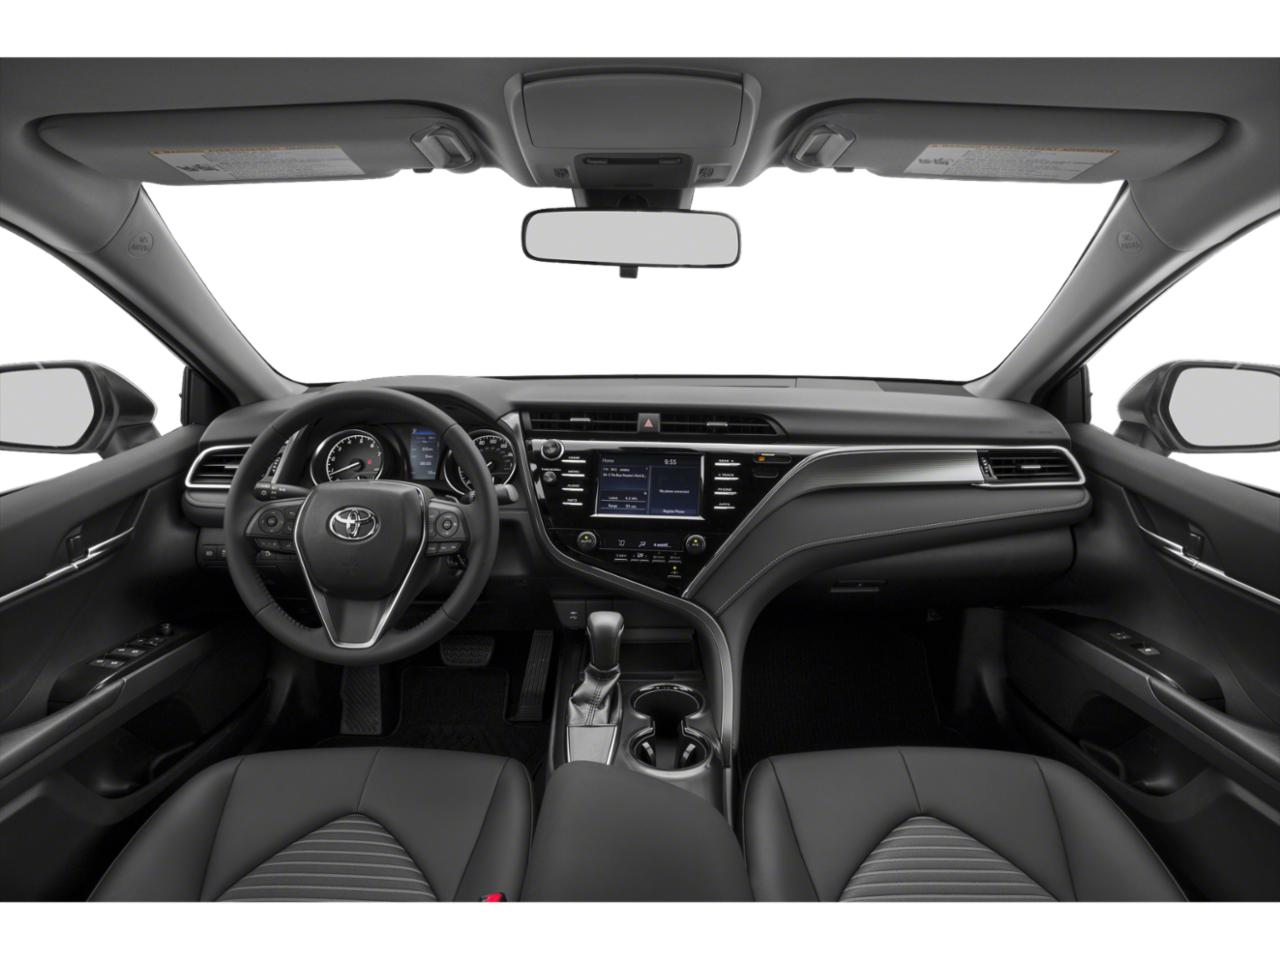 Toyota Camry 2018 Interior